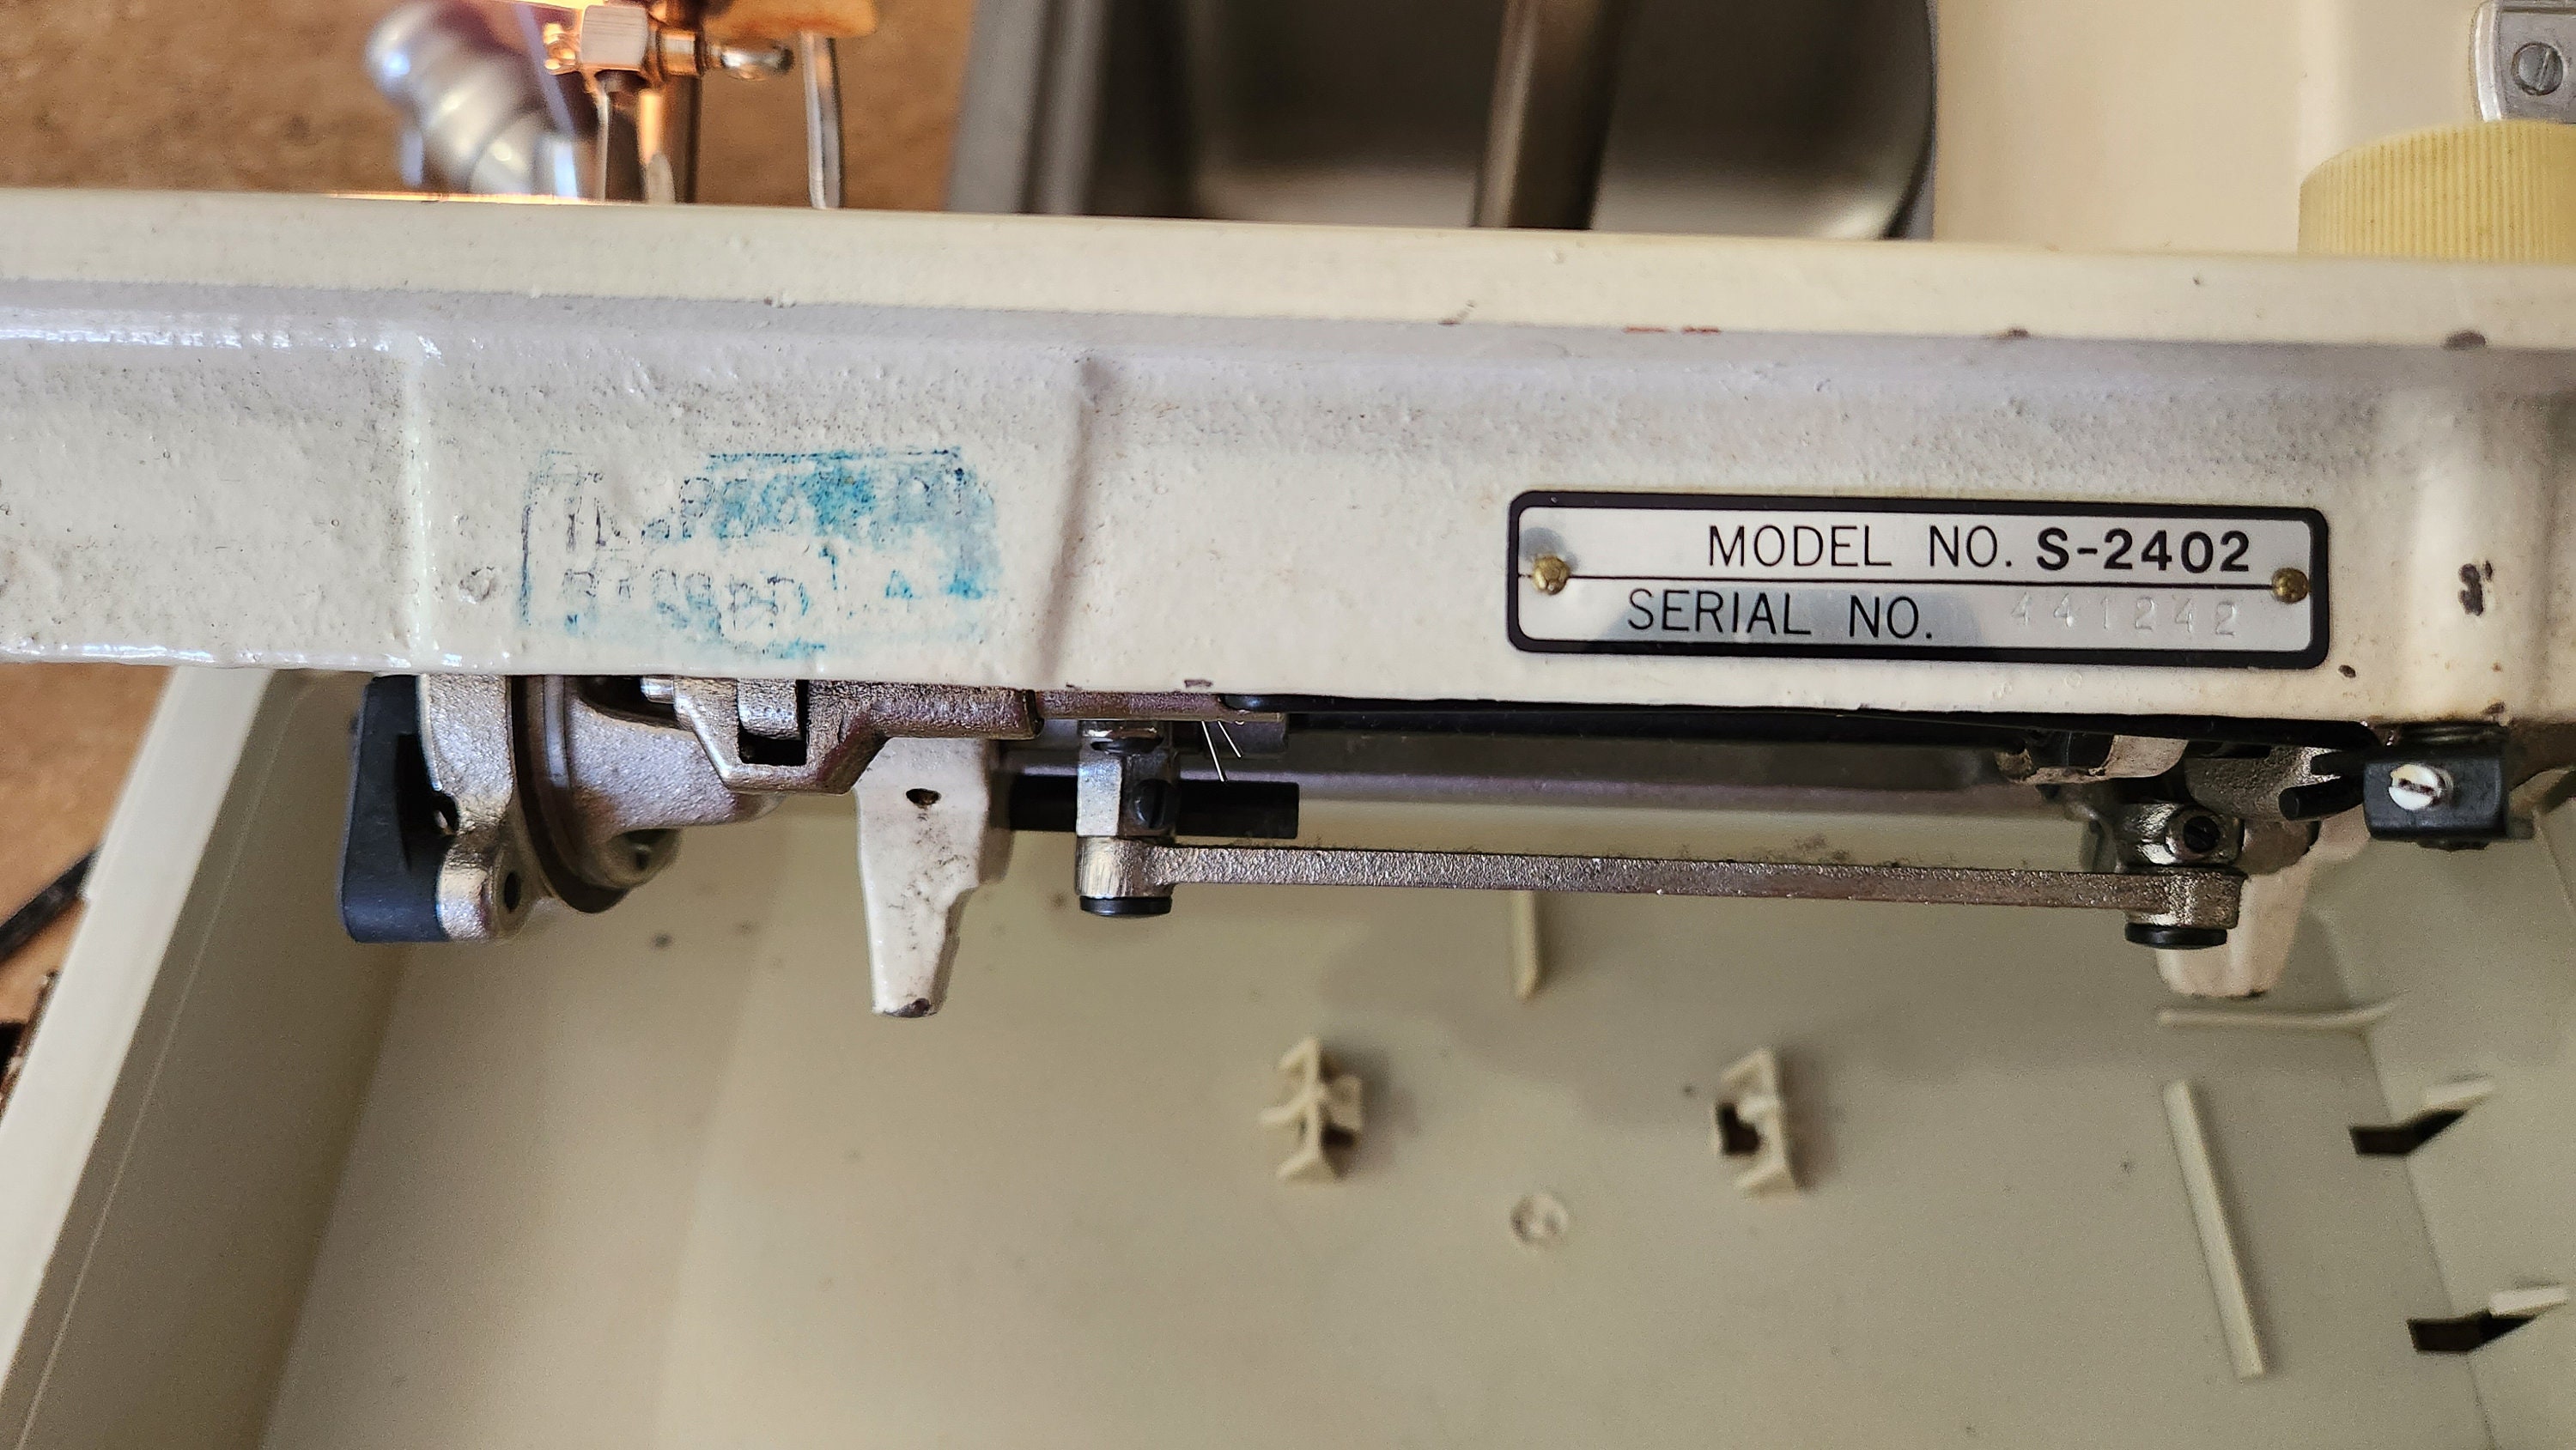 VINTAGE DRESSMAKER S-2402 Sewing Machine - Etsy